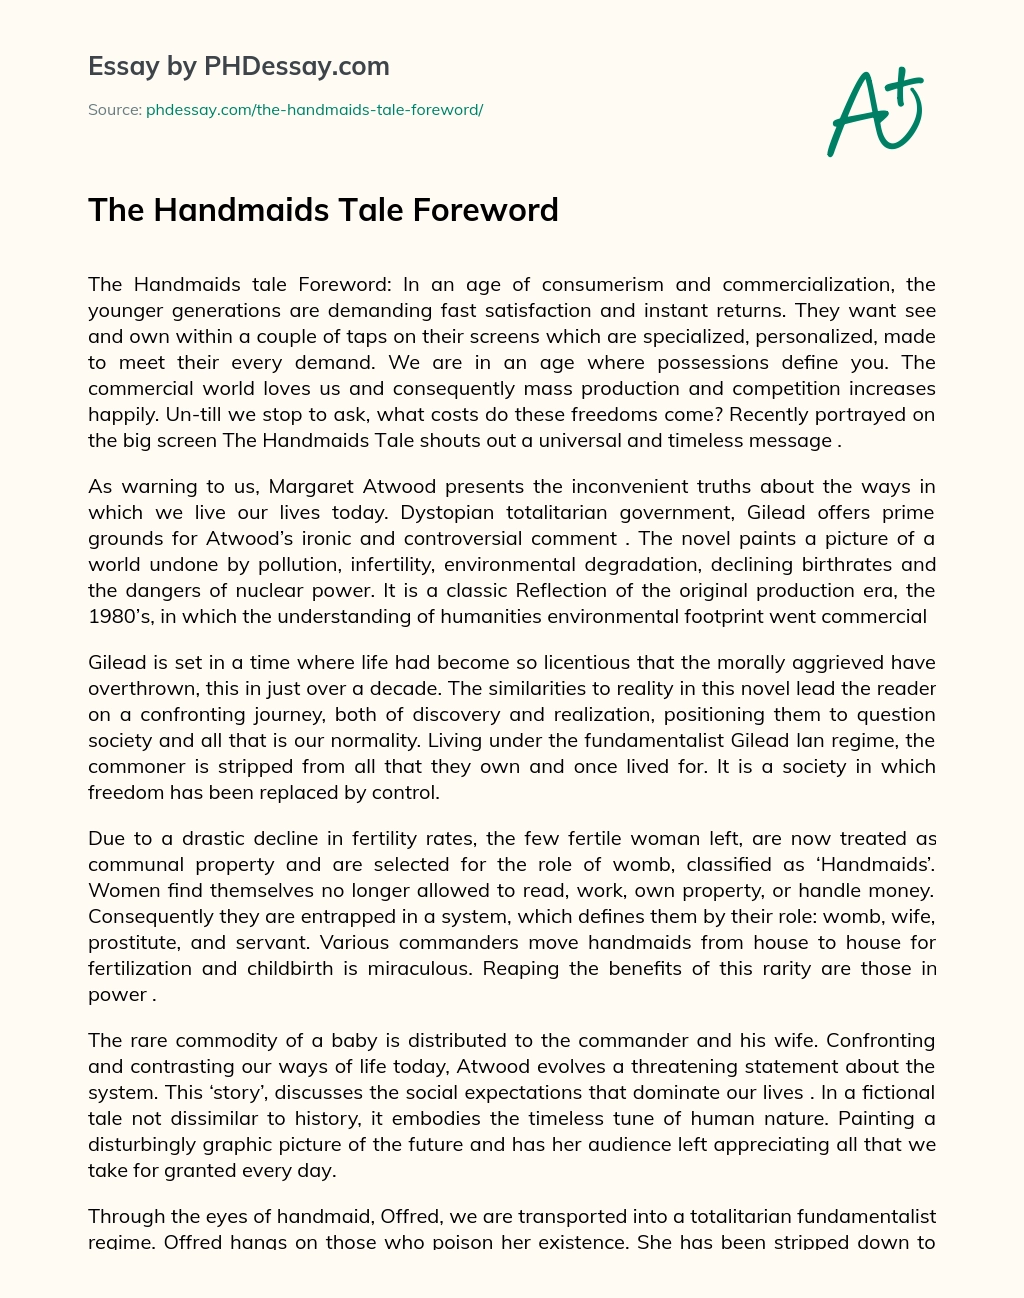 The Handmaids Tale Foreword essay